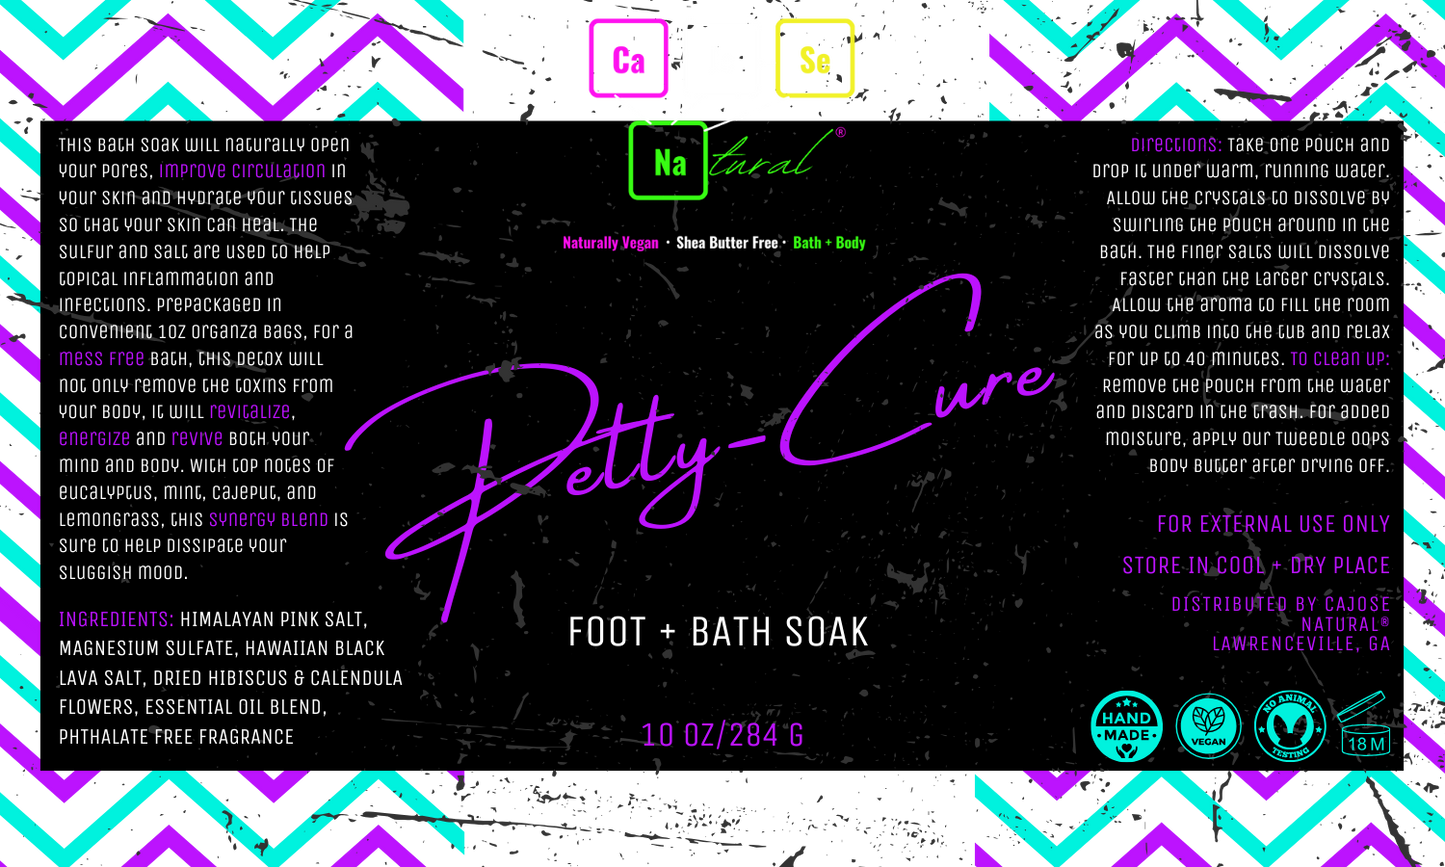 Petty-Cure Foot + Bath Soak - CaJoSe Natural